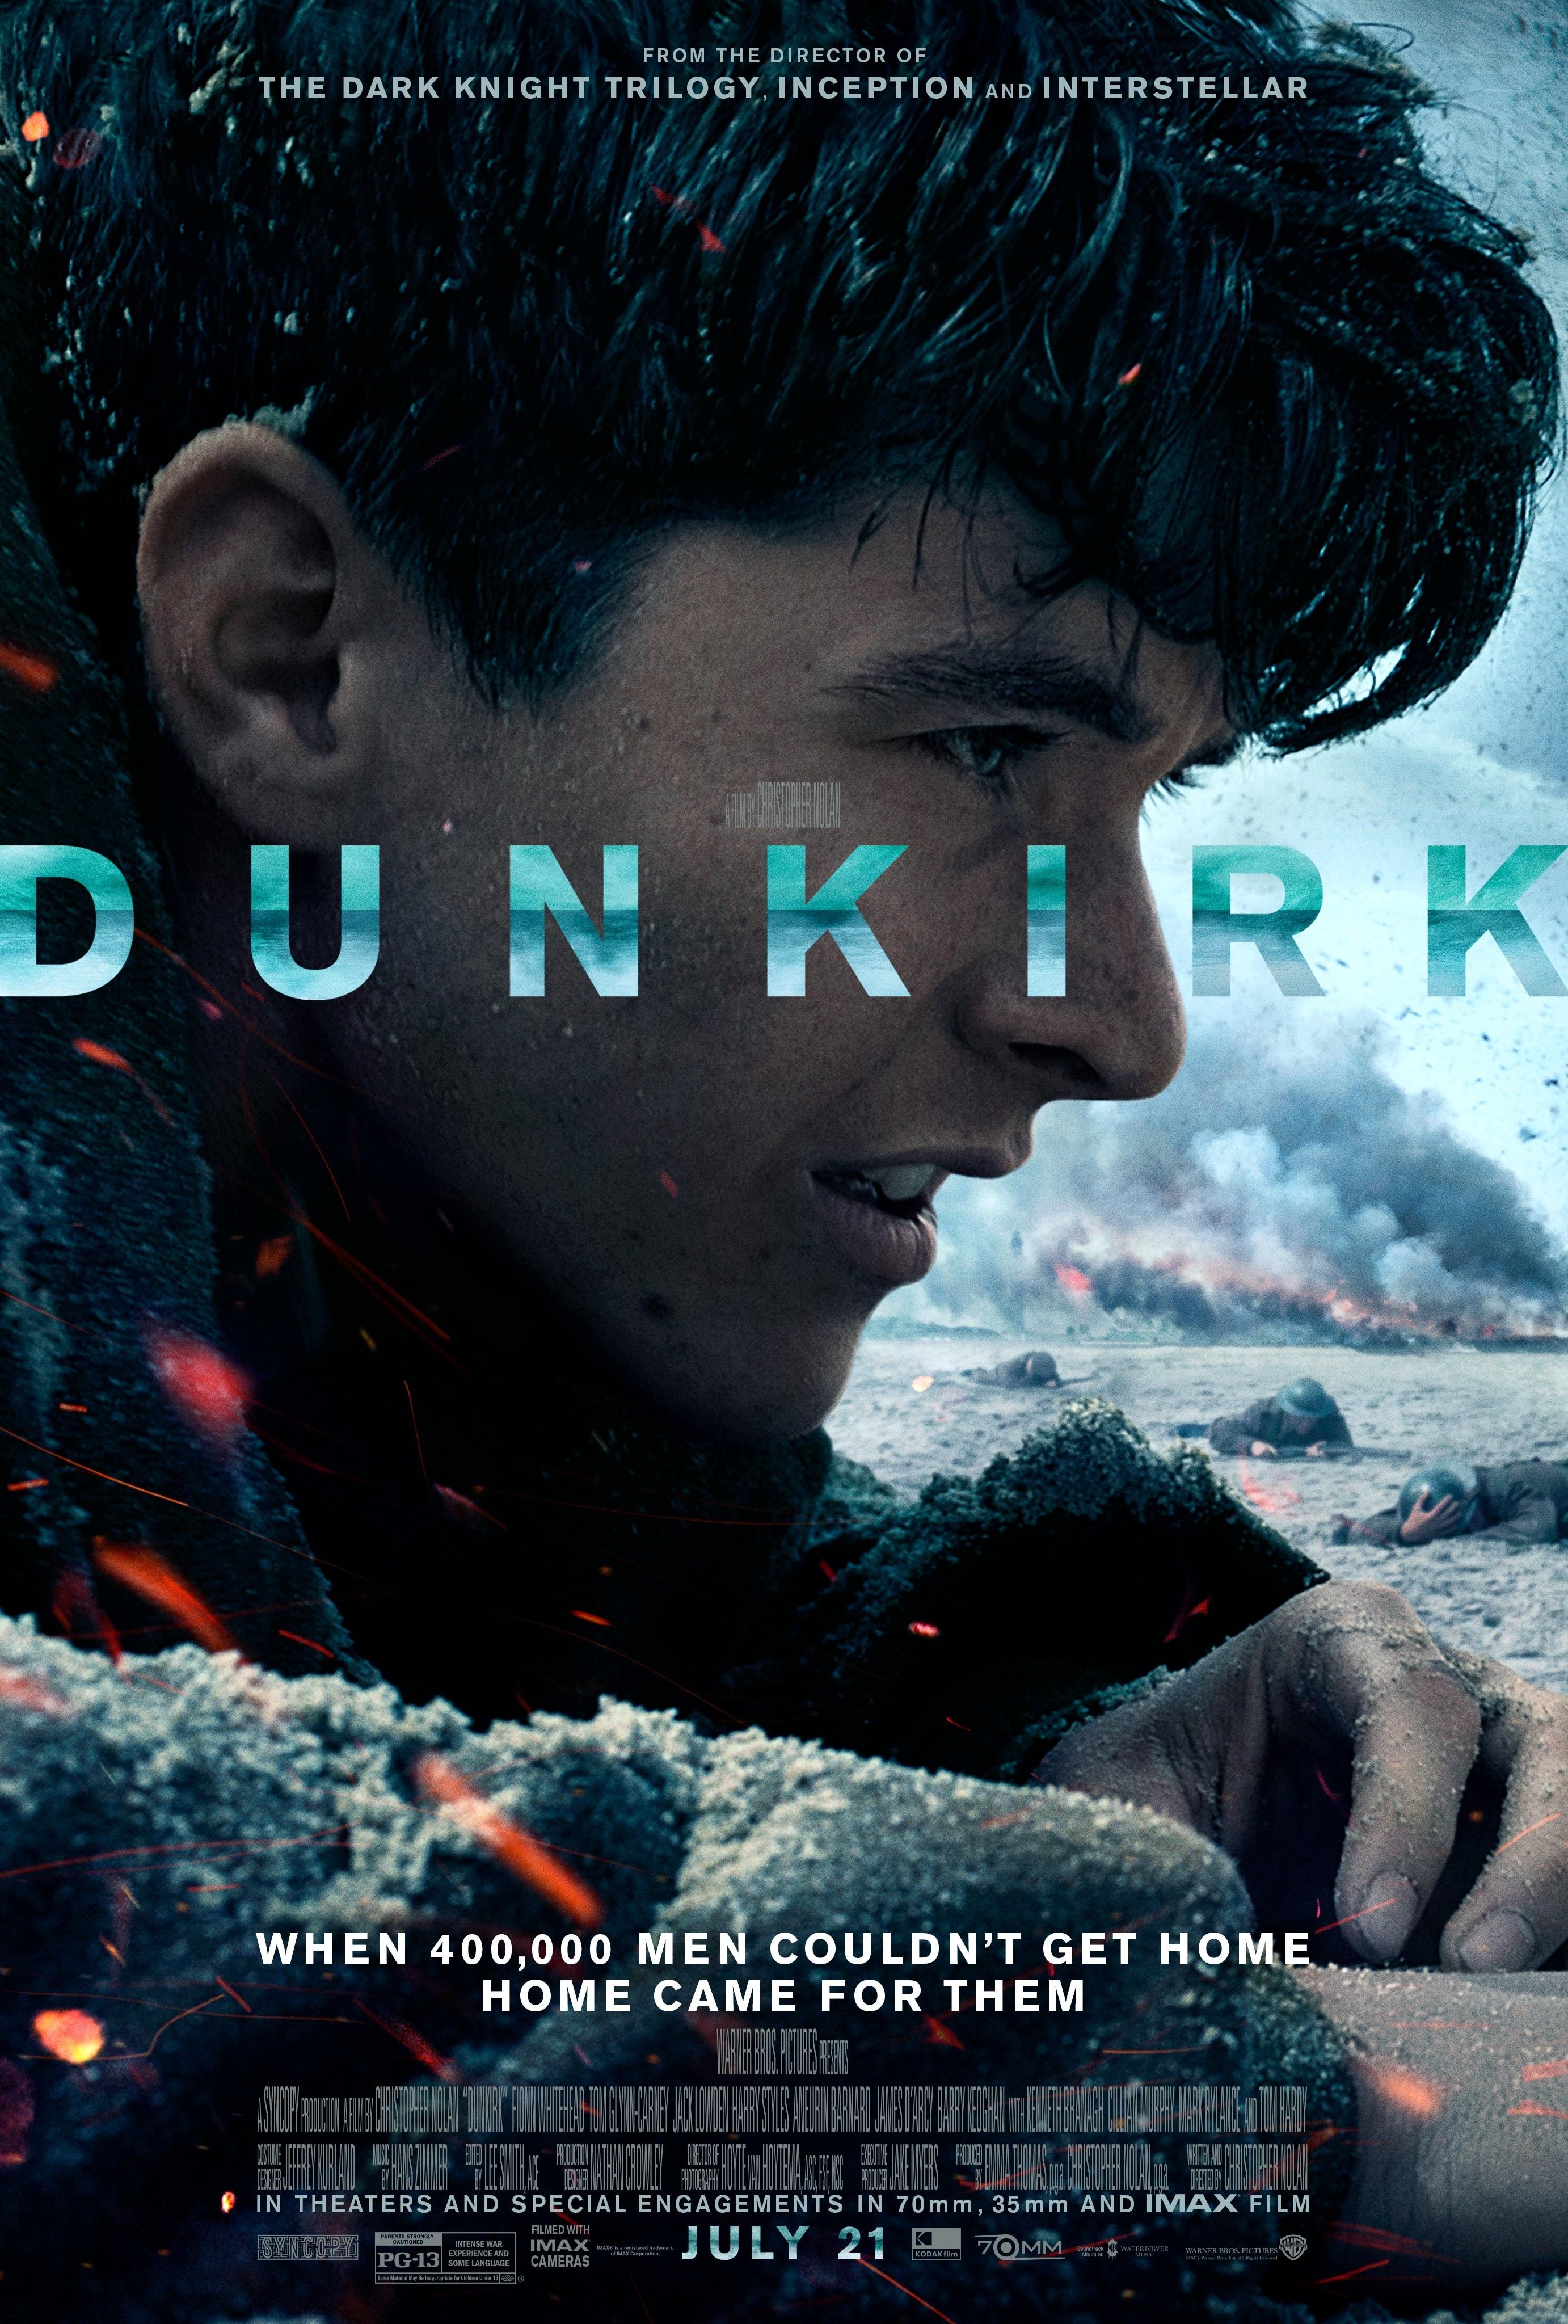 plakat-filmowy Dunkierka